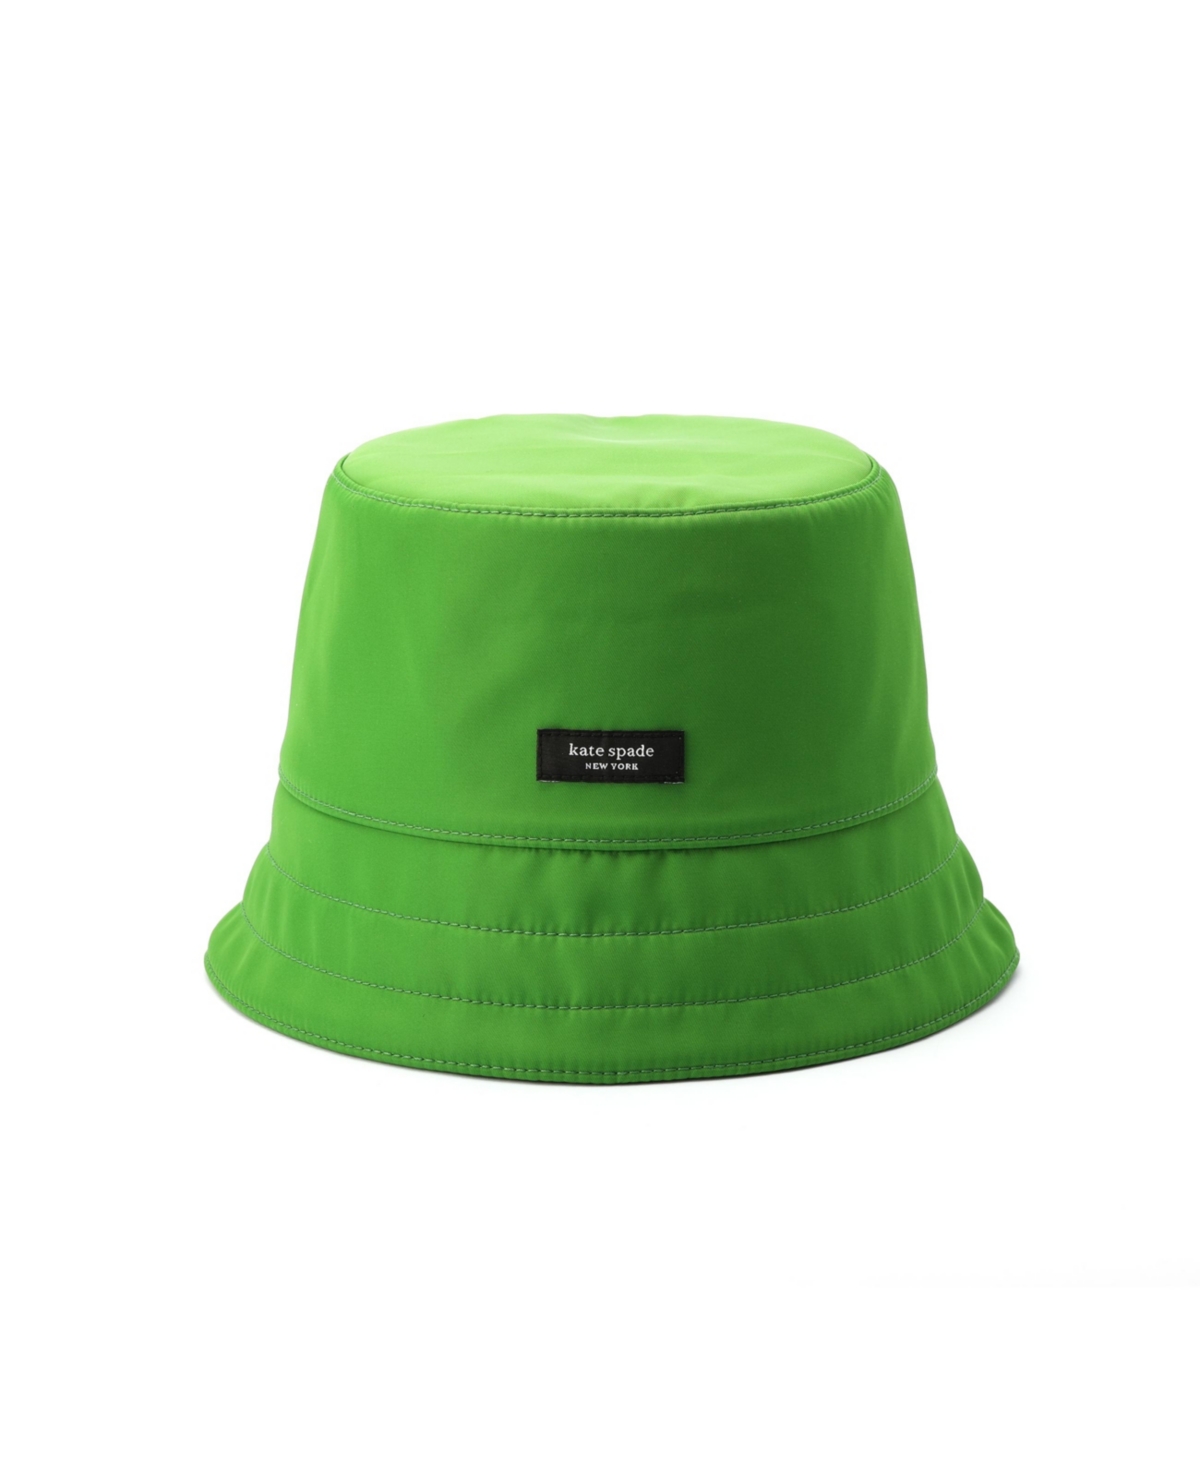 Kate Spade Women's Packable Sam Nylon Bucket Hat In Ks Green